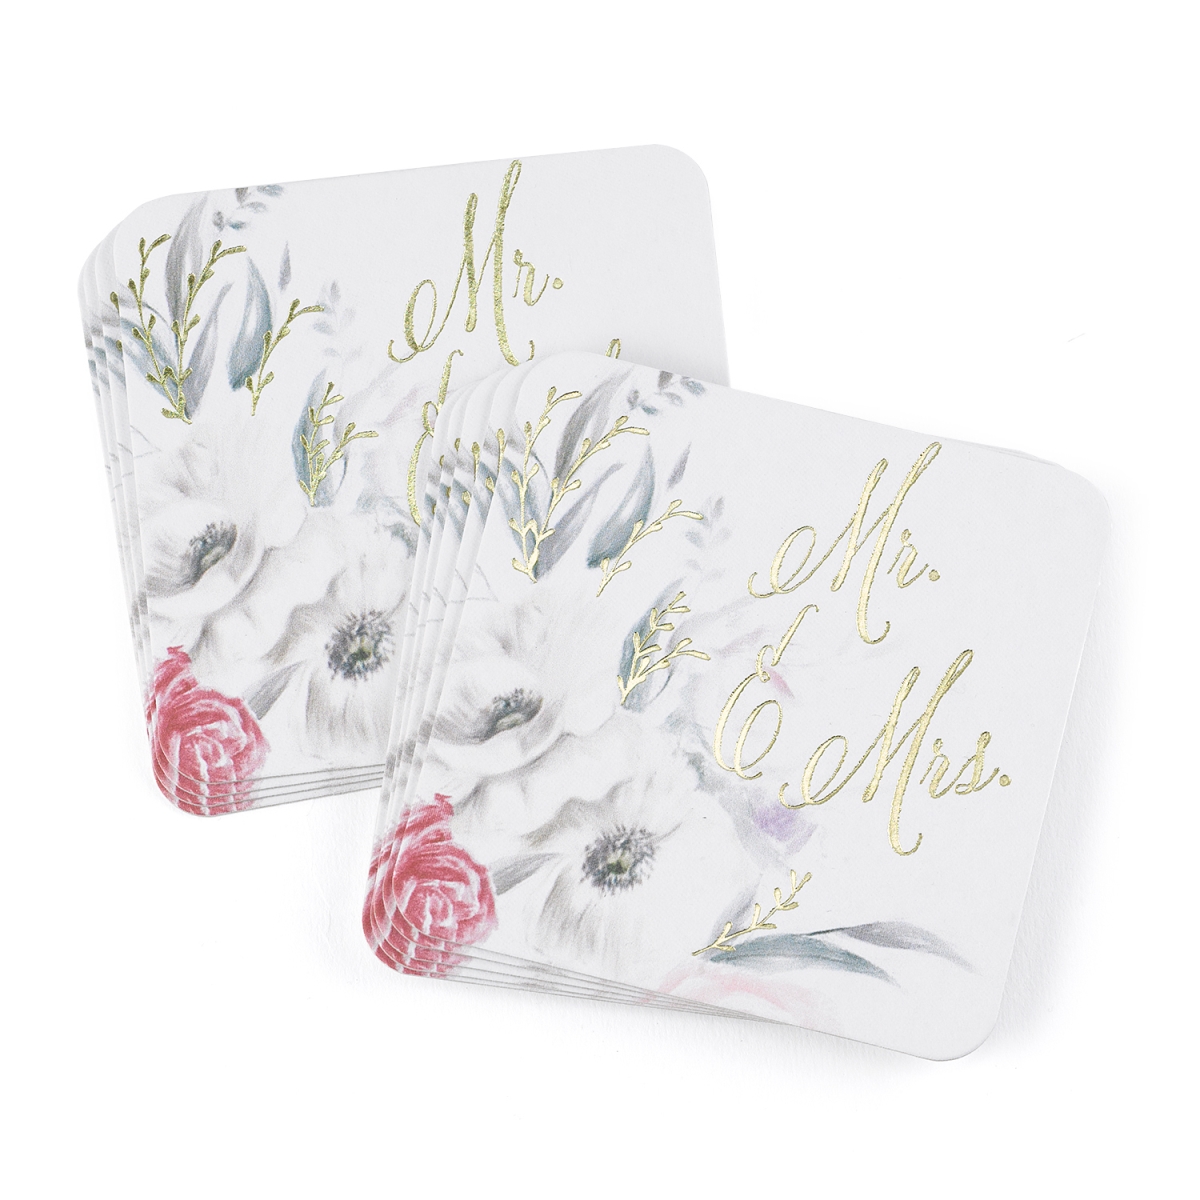 Hortense B. Hewitt 55132 Ethereal Floral Coaster - Blank - Pack Of 25